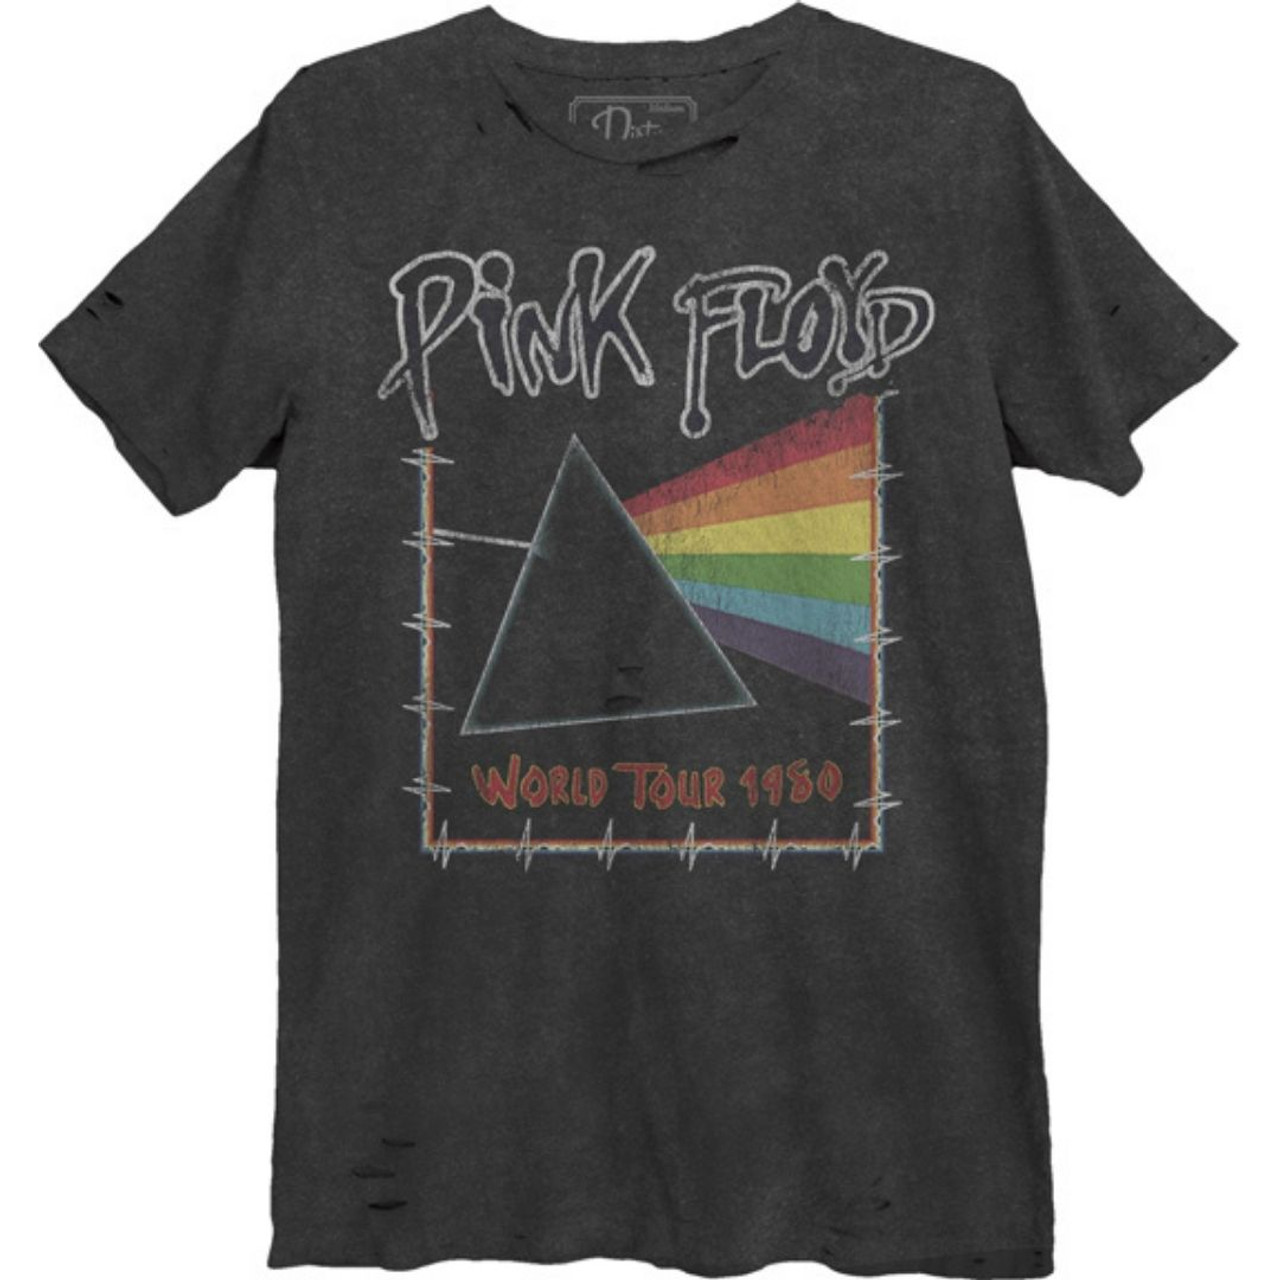 Brace Sølv kød Pink Floyd Vintage Concert T-shirt by Dirty Cotton Scoundrels - World Tour  1980 | Men's Unisex Distressed Fashion Shirt - Rocker Rags